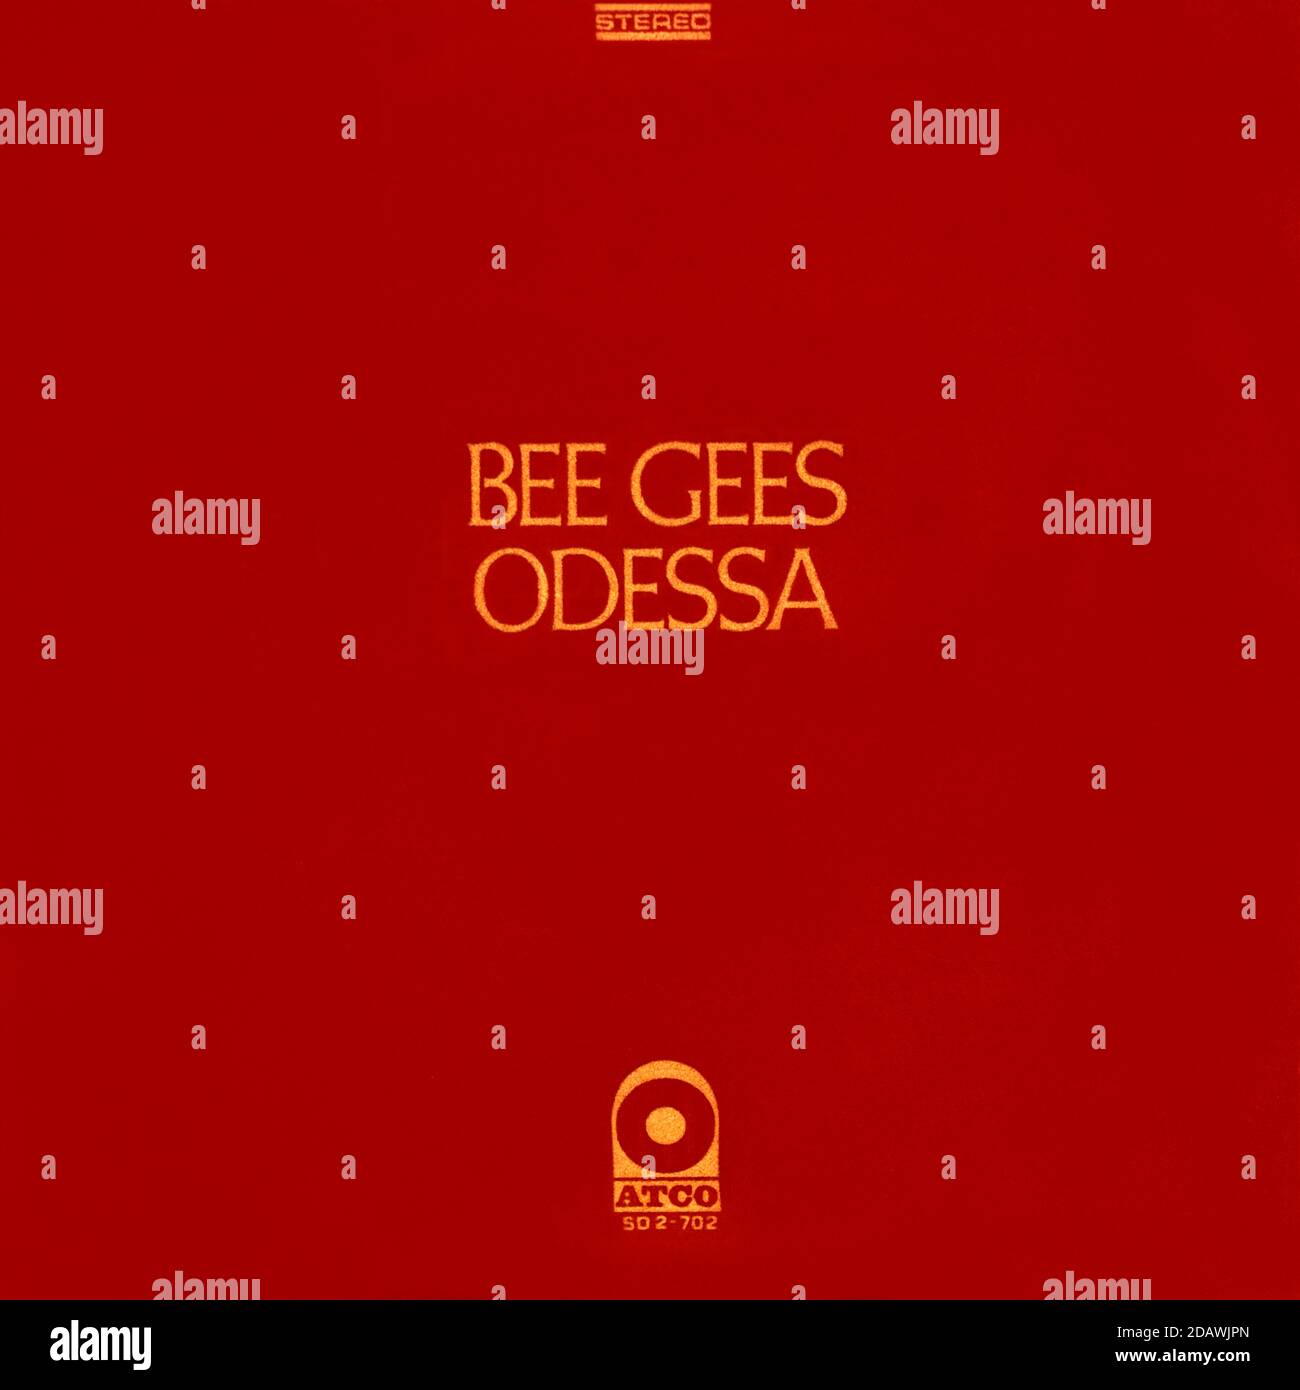 The Bee Gees - original Vinyl Album Cover - Odessa - 1969 Stockfoto